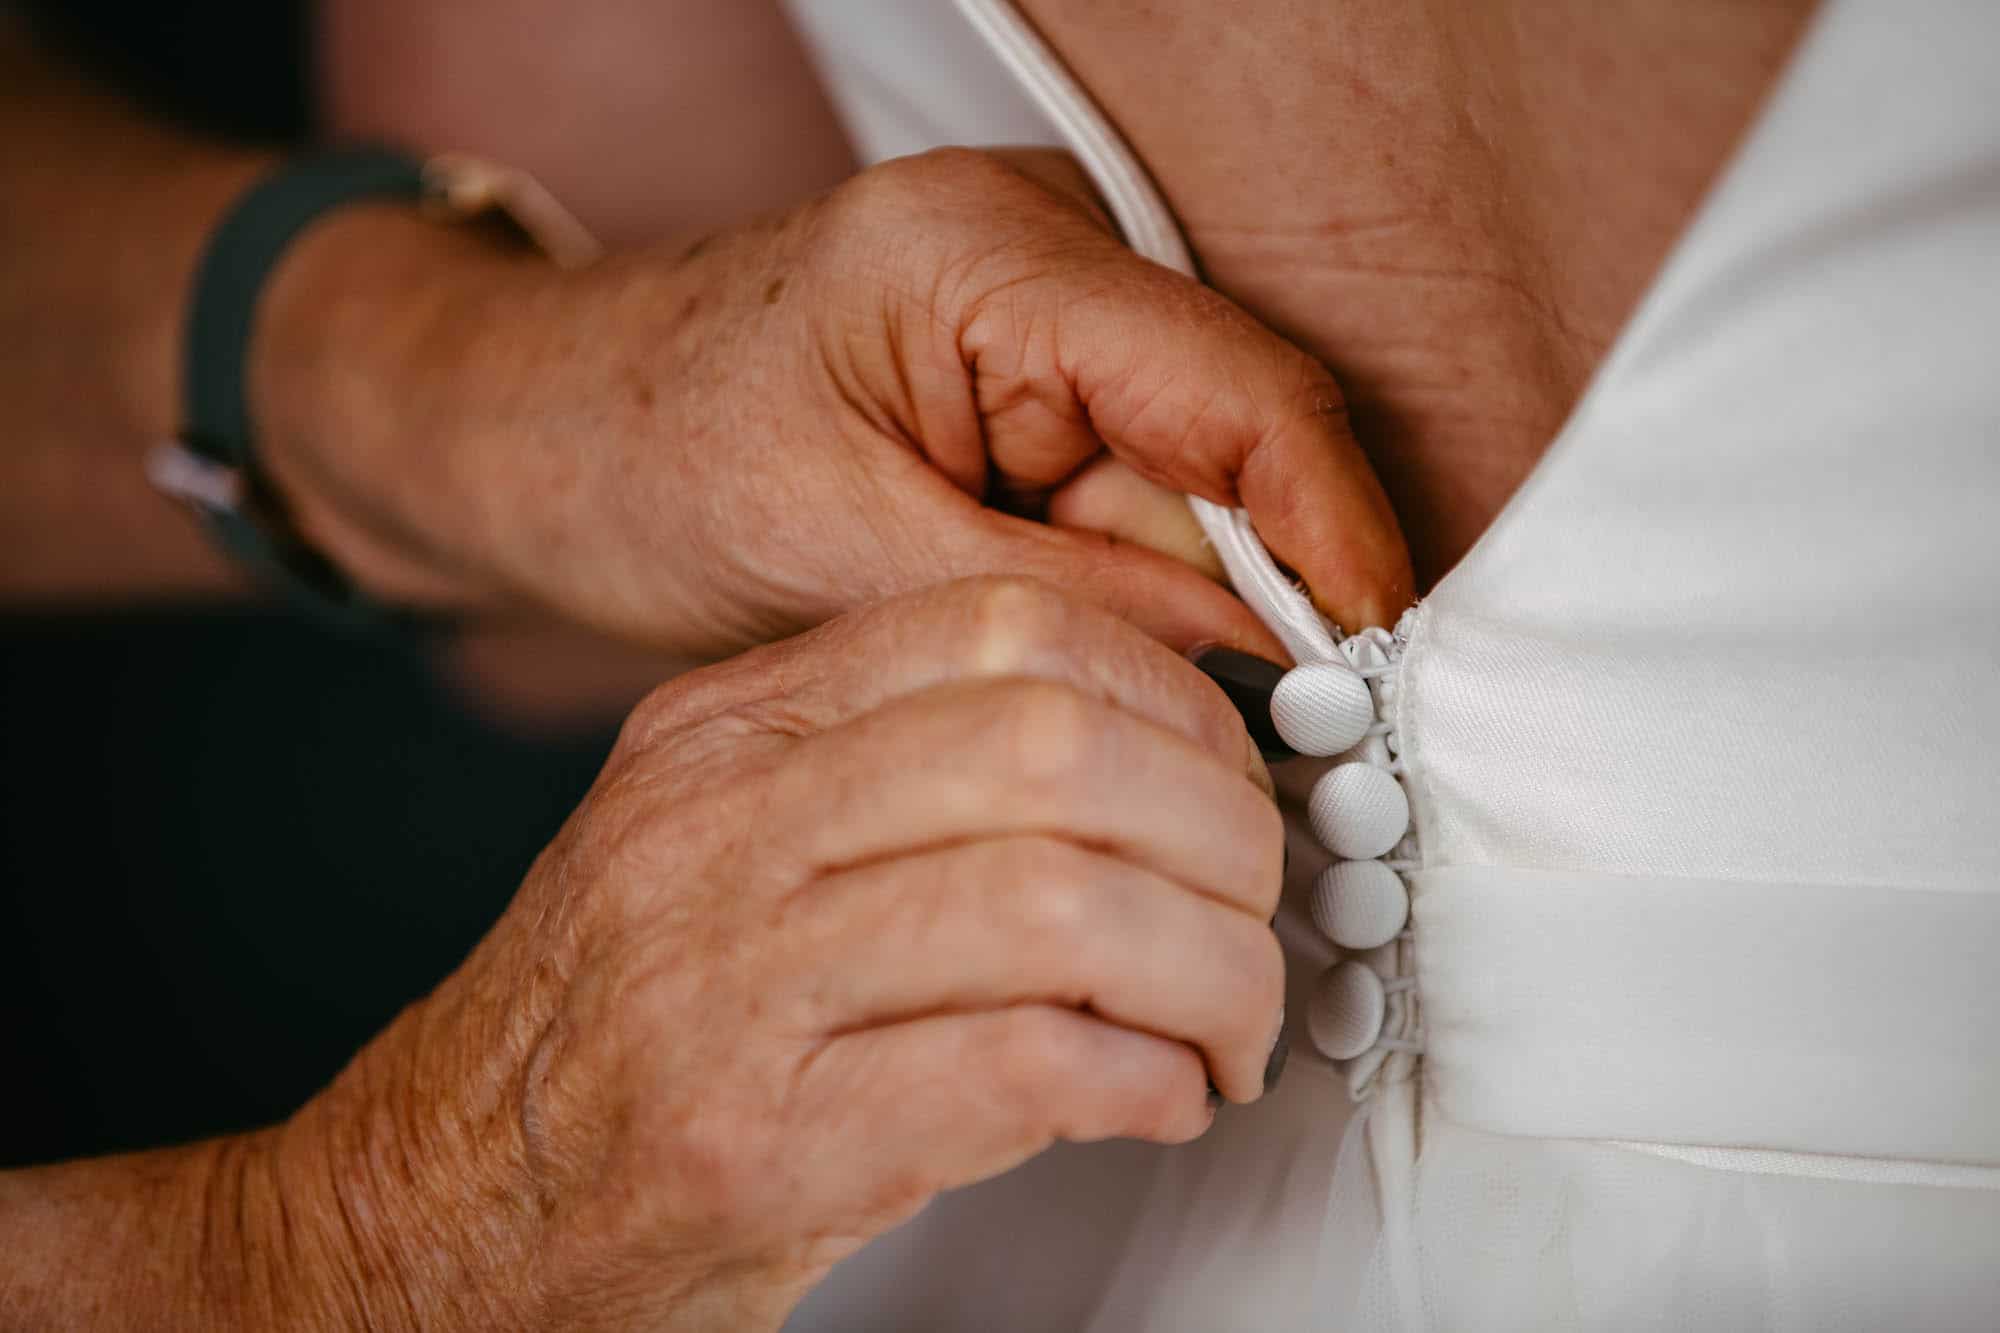 A woman puts a button on a bride's dress.